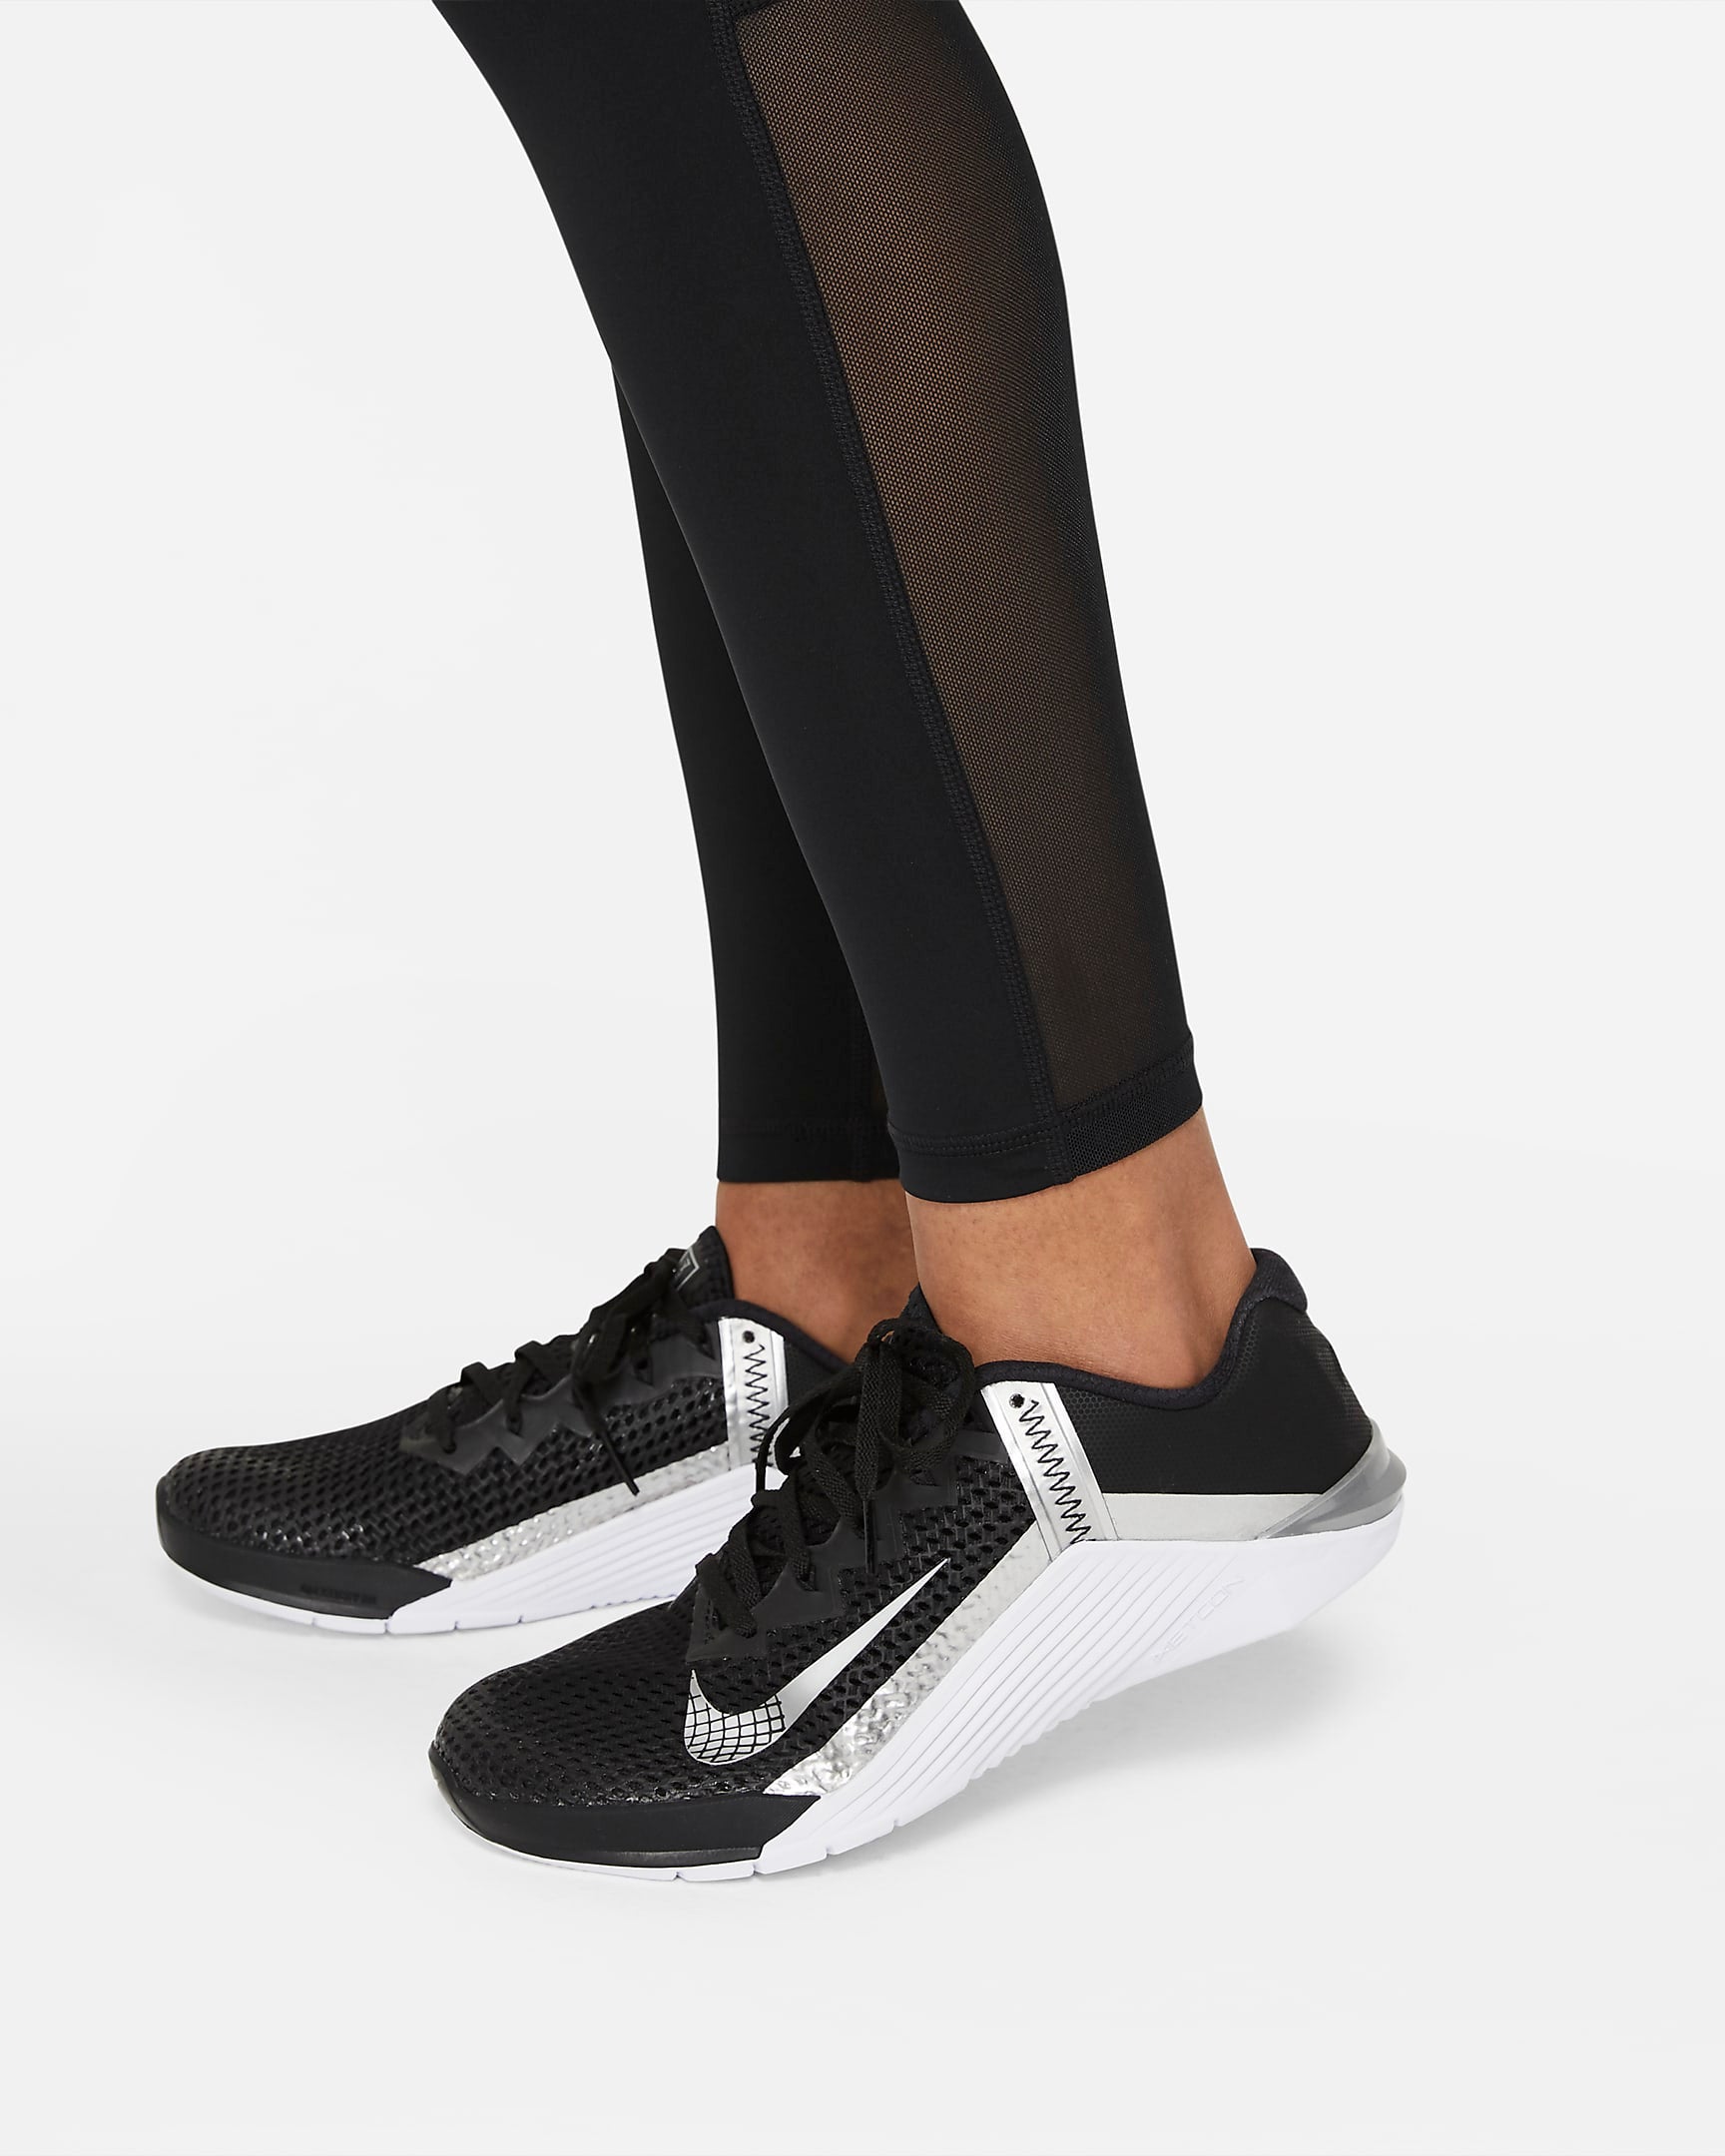 Nike Women's Pro 365 Tights Black CZ9779-010